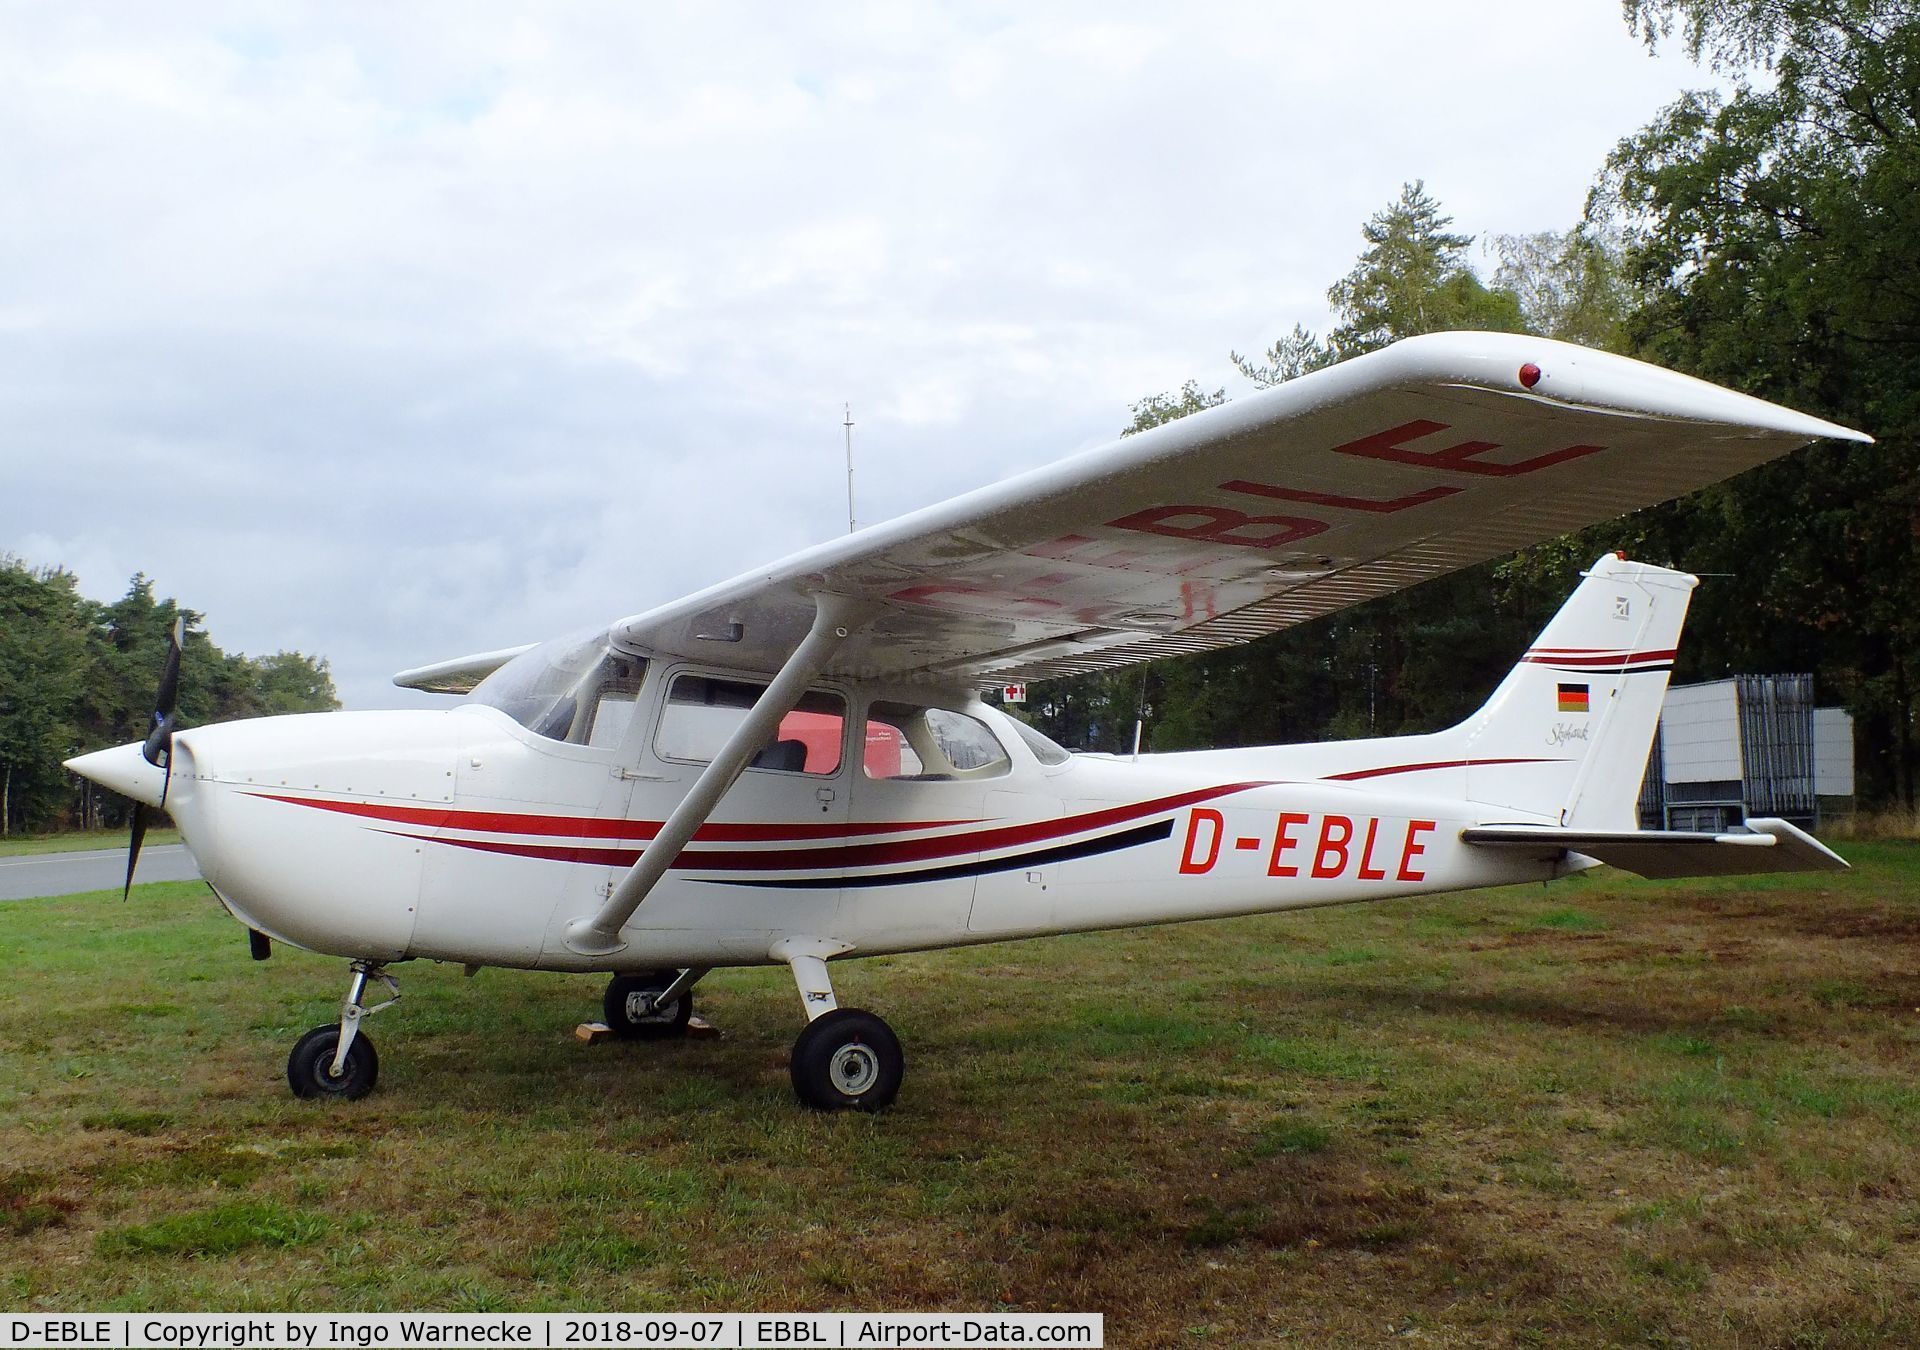 D-EBLE, 1976 Reims F172M Skyhawk Skyhawk C/N 1510, Cessna (Reims) F172M Skyhawk at the 2018 BAFD spotters day, Kleine Brogel airbase